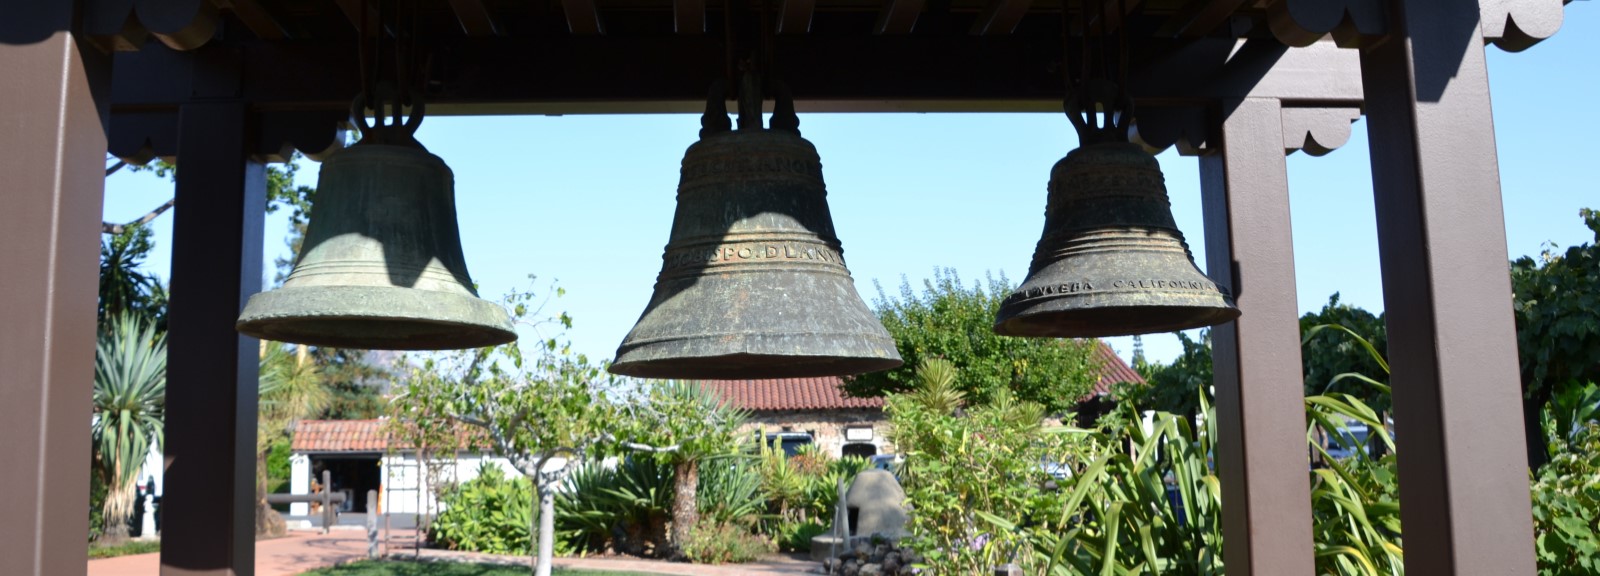 Three bells outside the mission at San Luis Obispo, CA